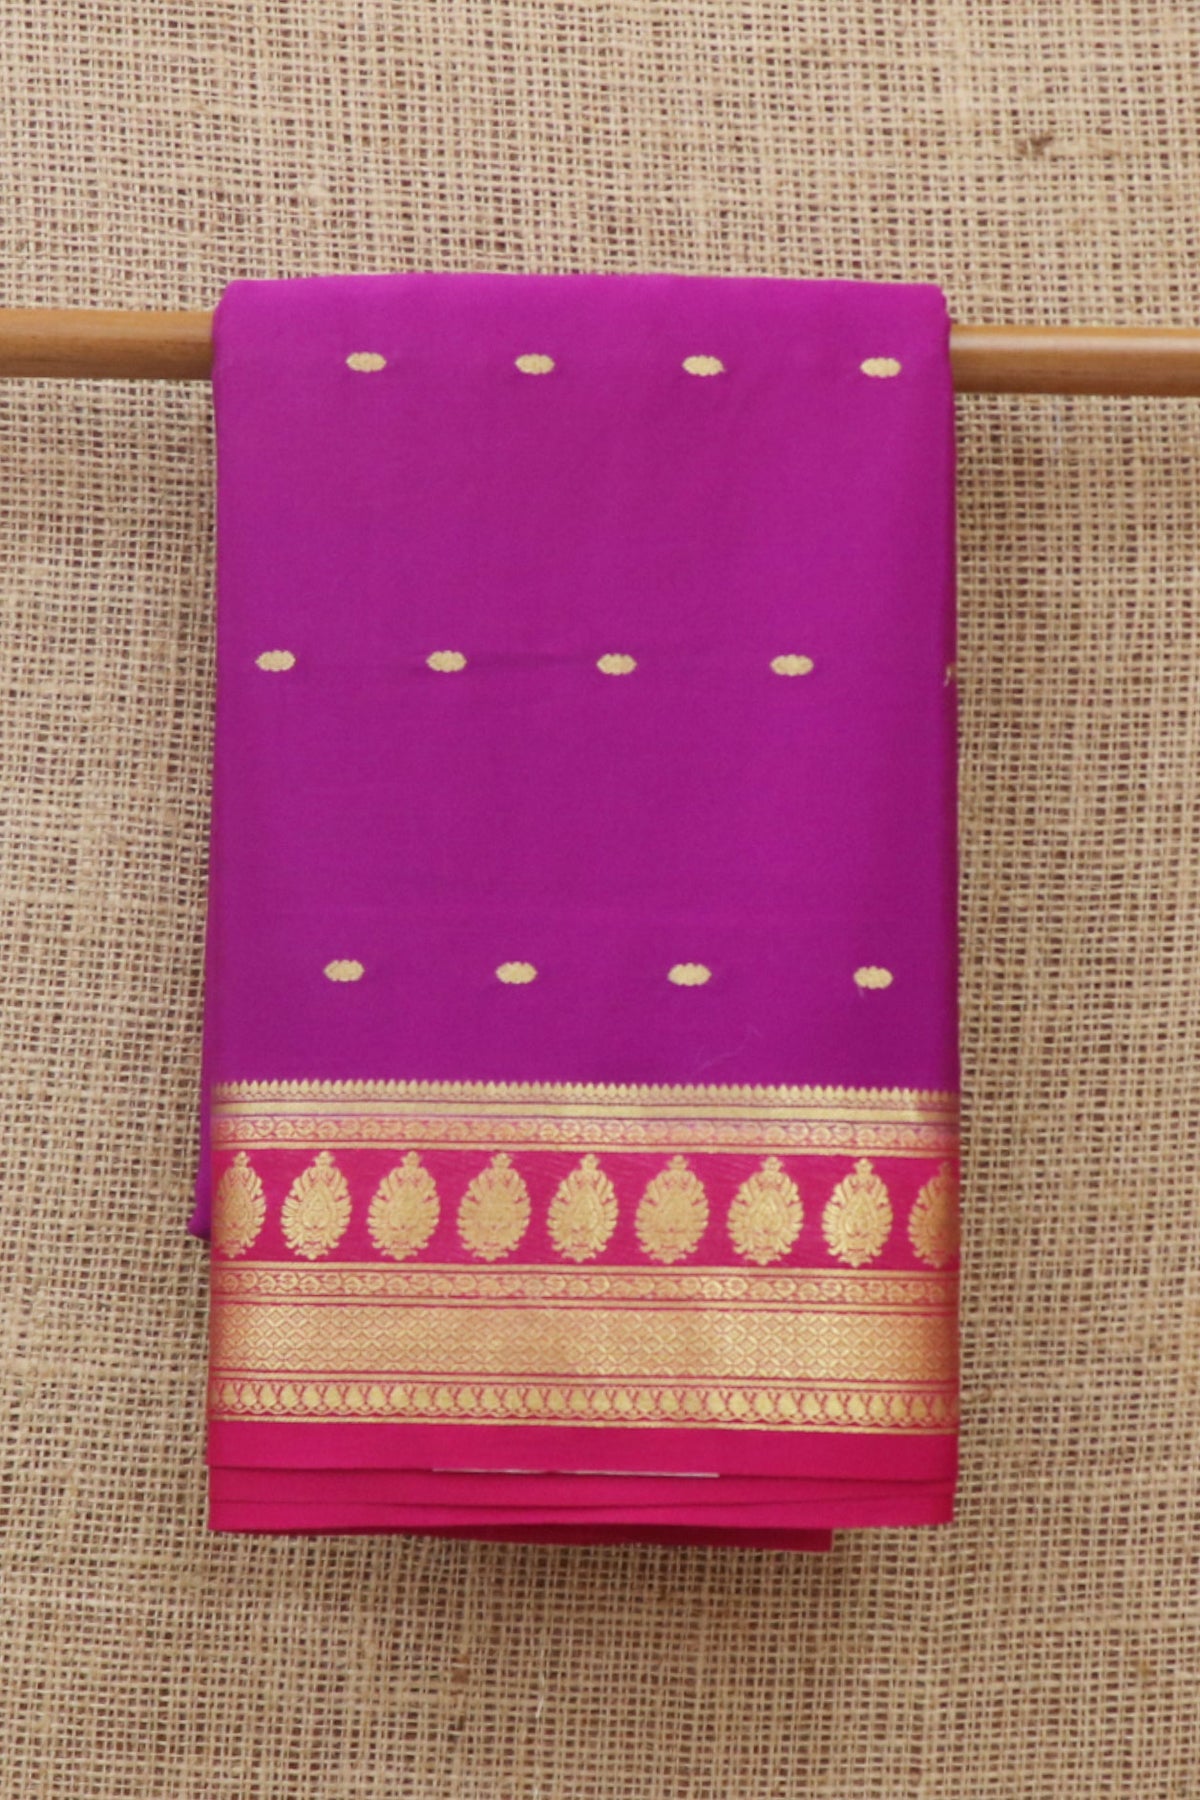 Contrast Border In Buttis Magenta Purple Mysore Silk Saree